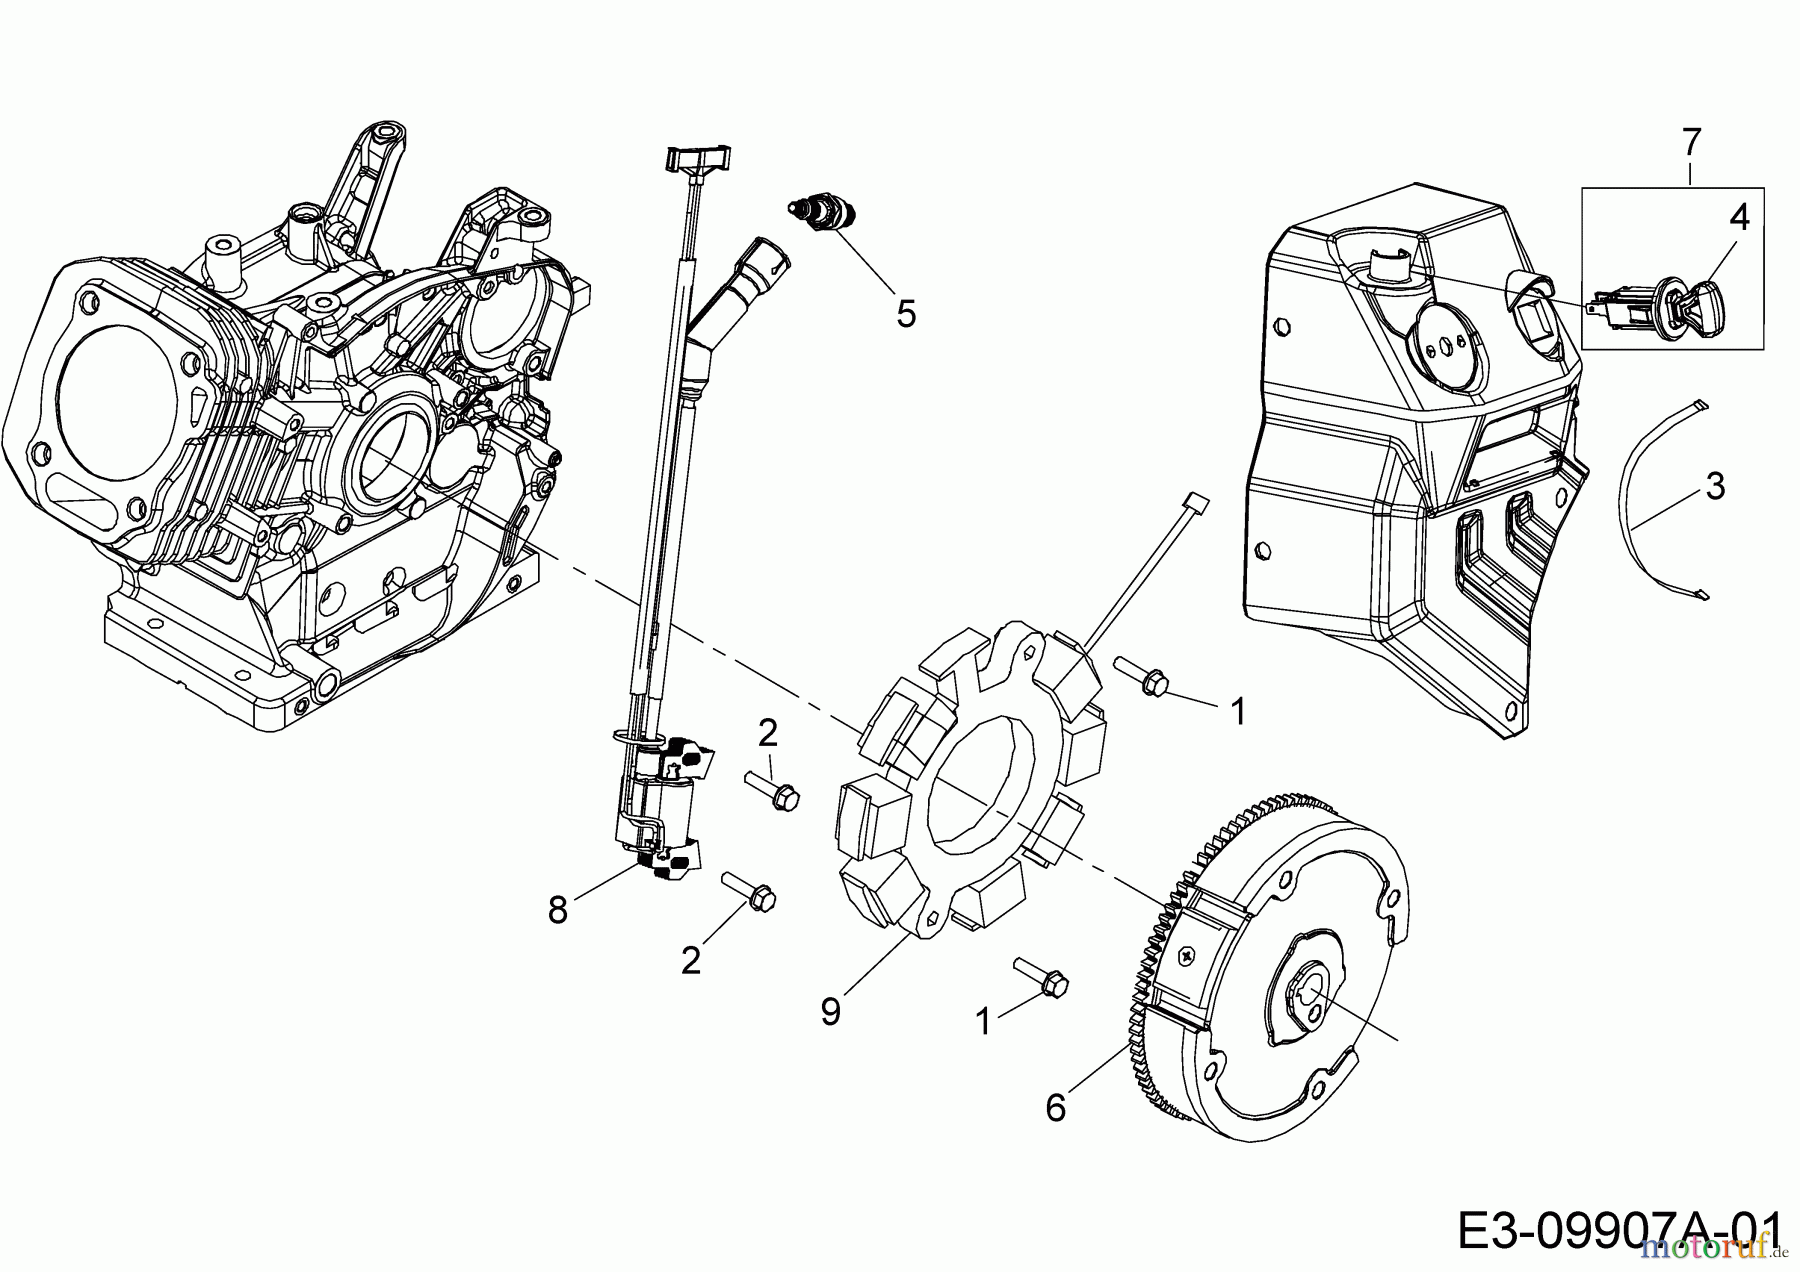  MTD-Engines MTD horizontal 683-WH 752Z683-WH  (2017) Flywheel, Ignition key, Ignition